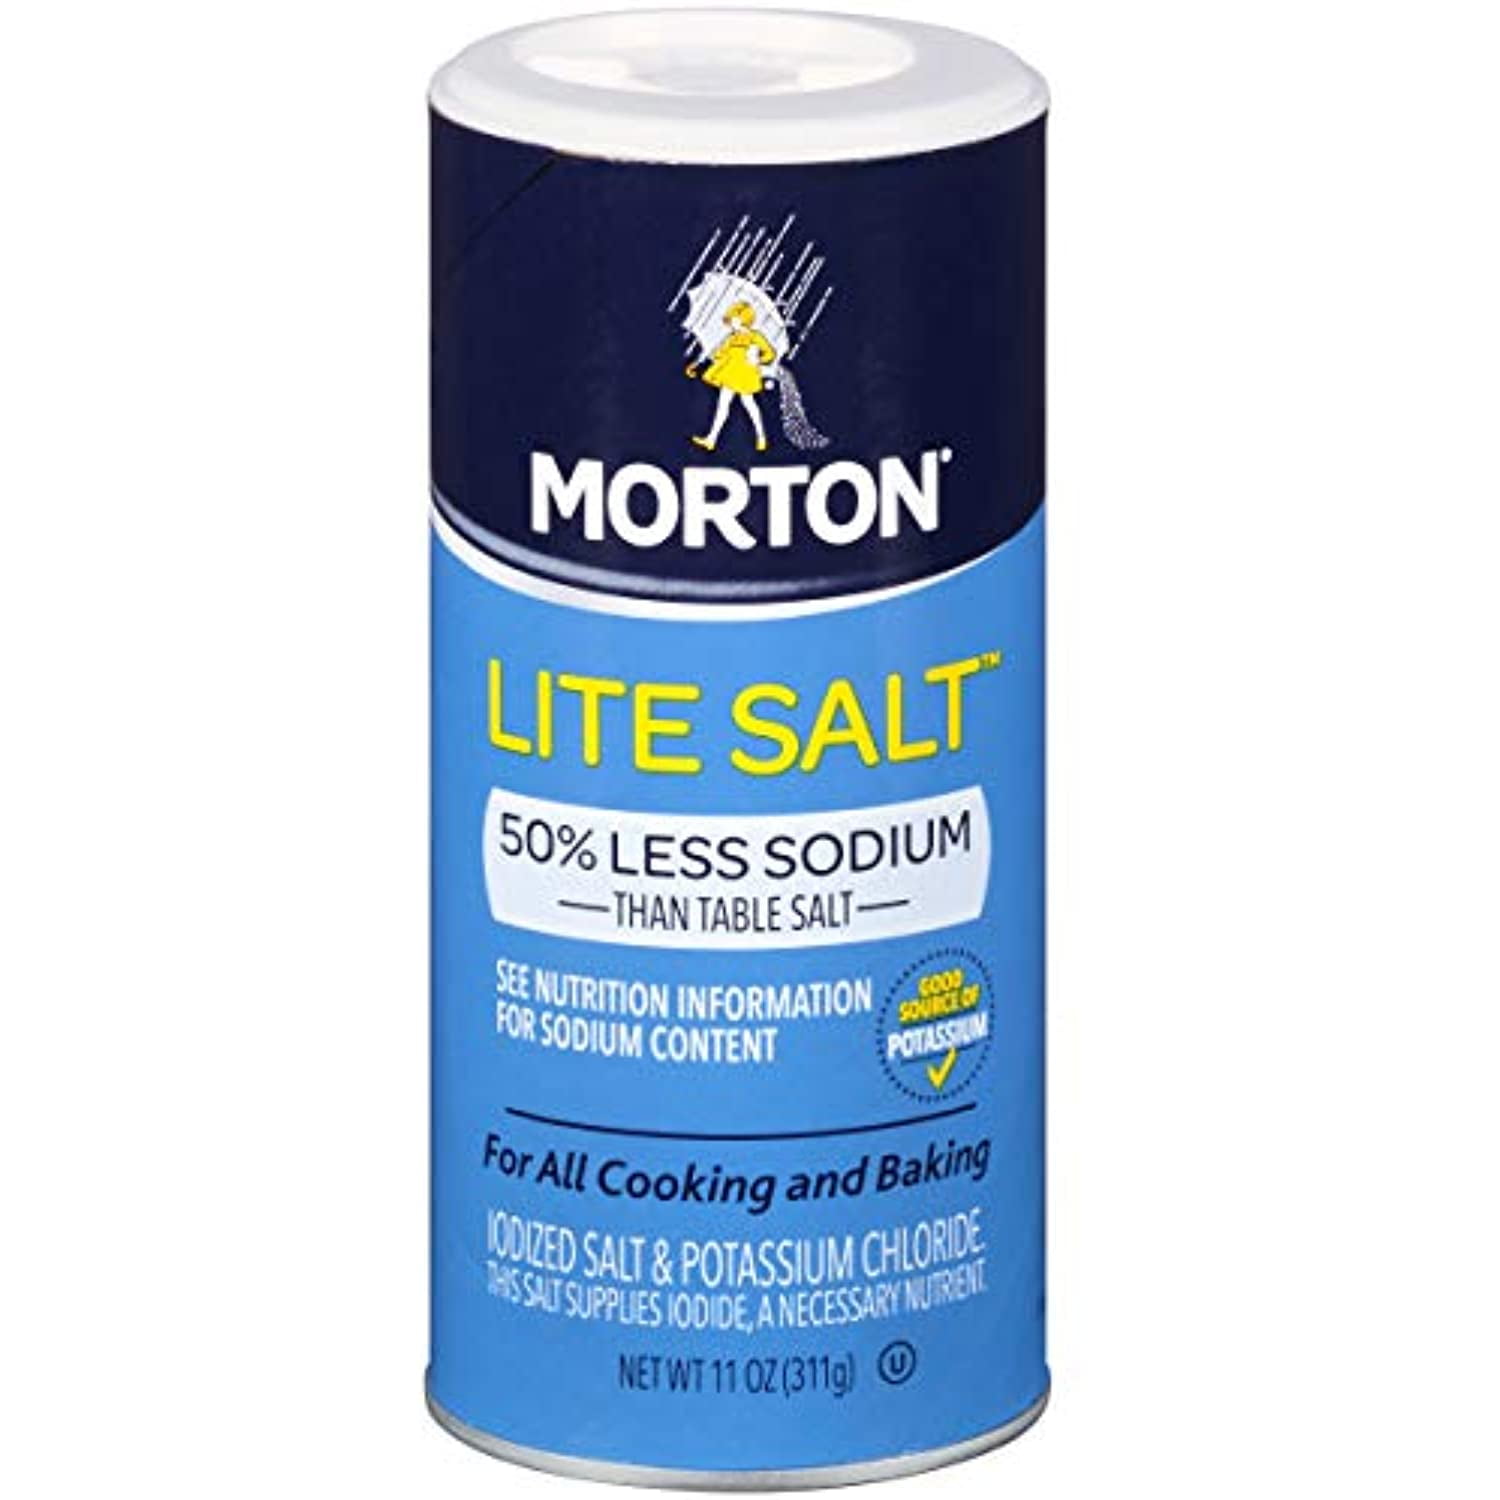 The Morton Lite Salt Single Swap Playing Card